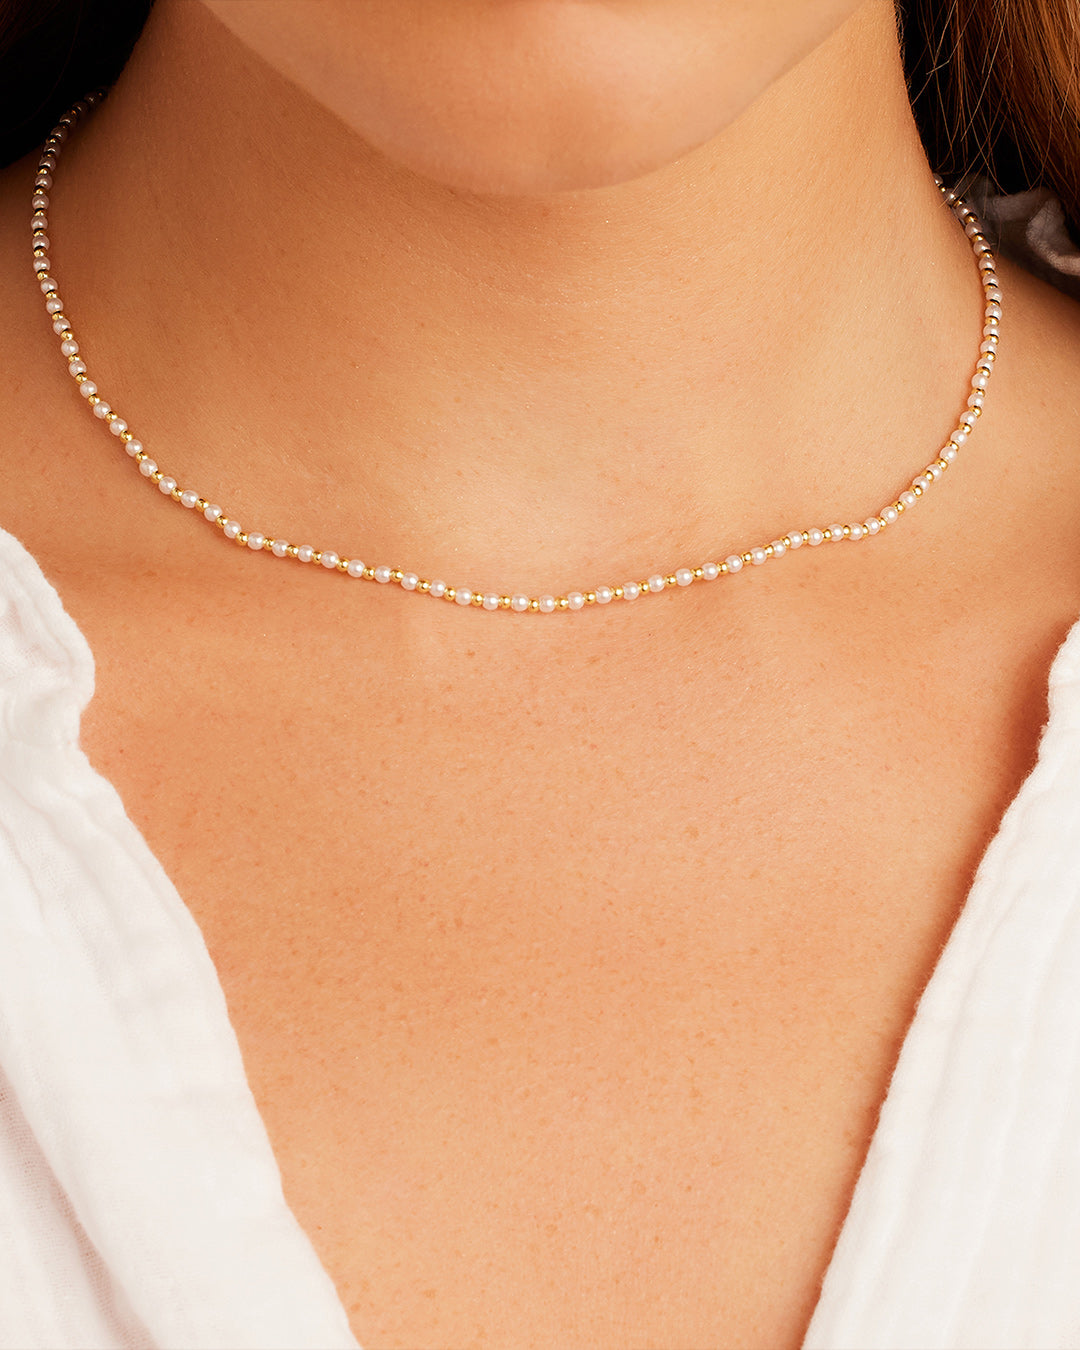 Gorjana Women's Pear Charm Necklace